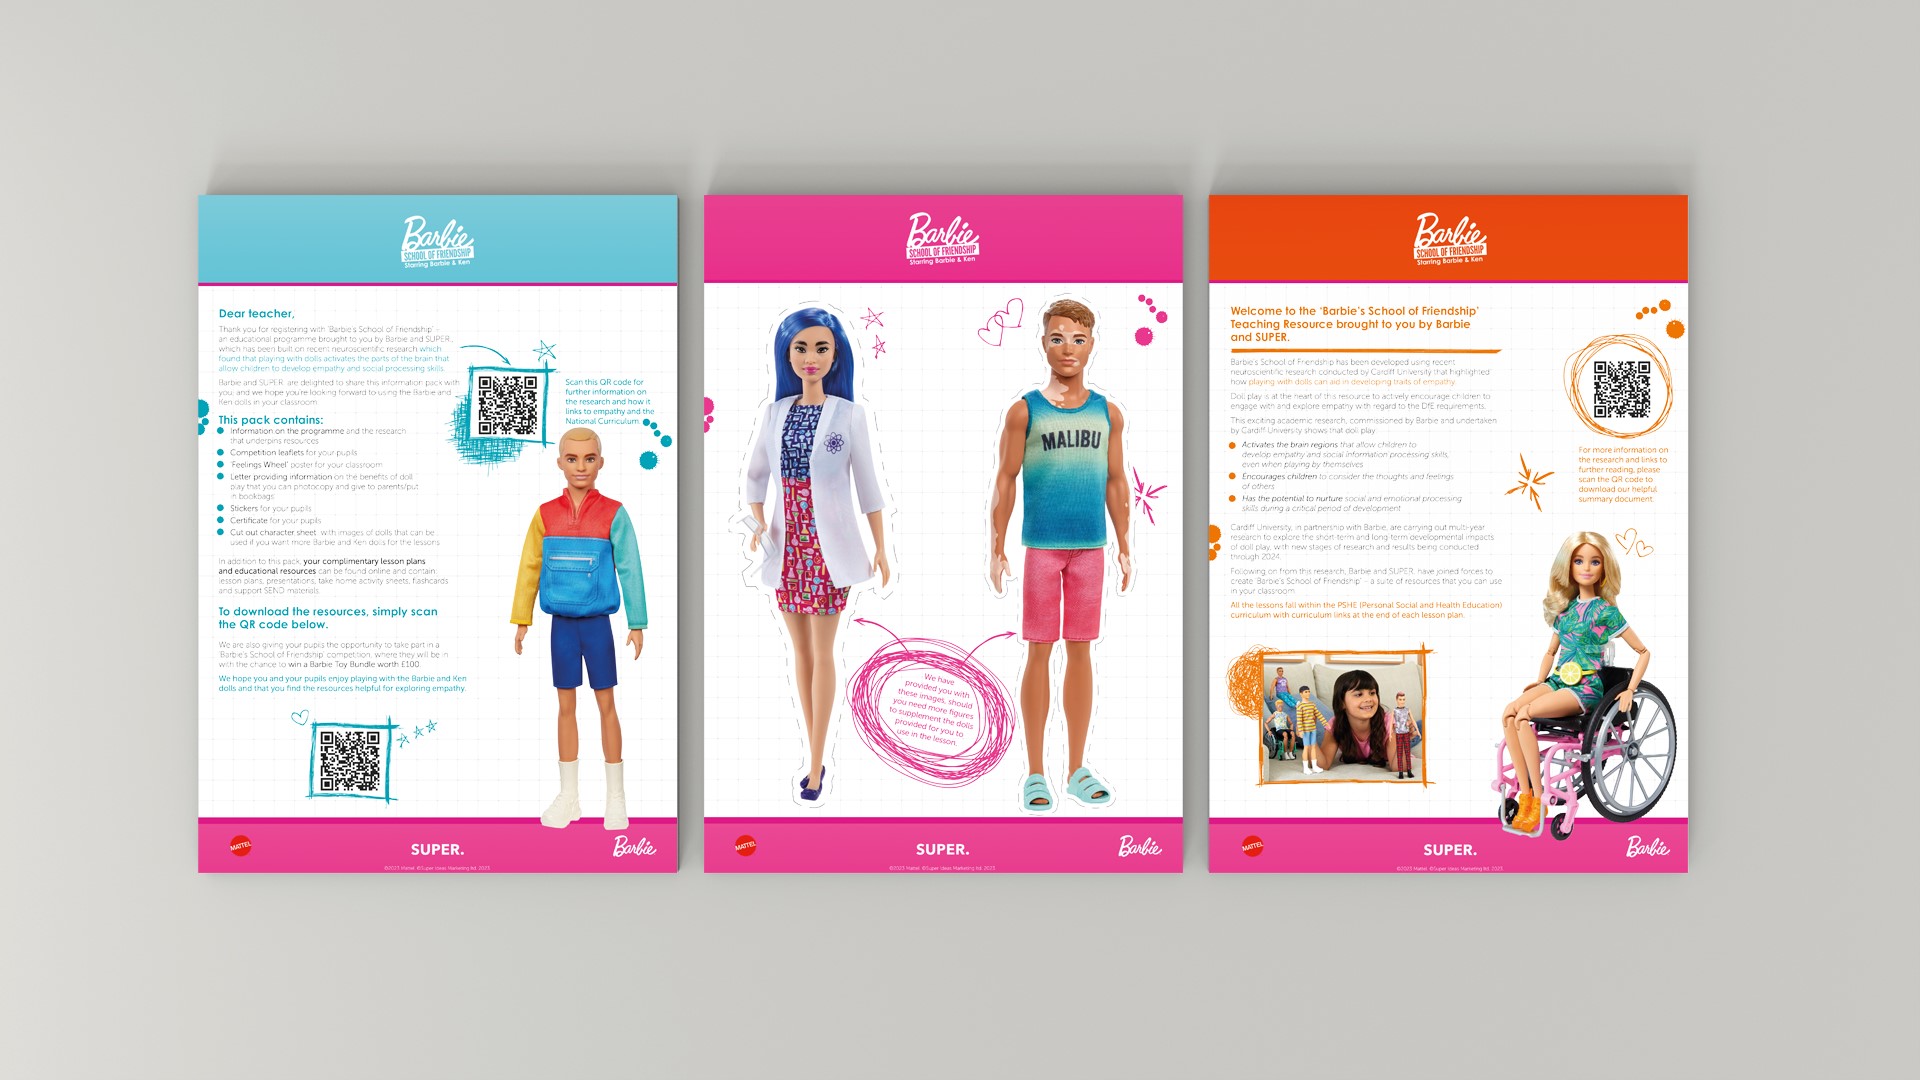 Barbie EYFS Early Years School Marketing Campaign